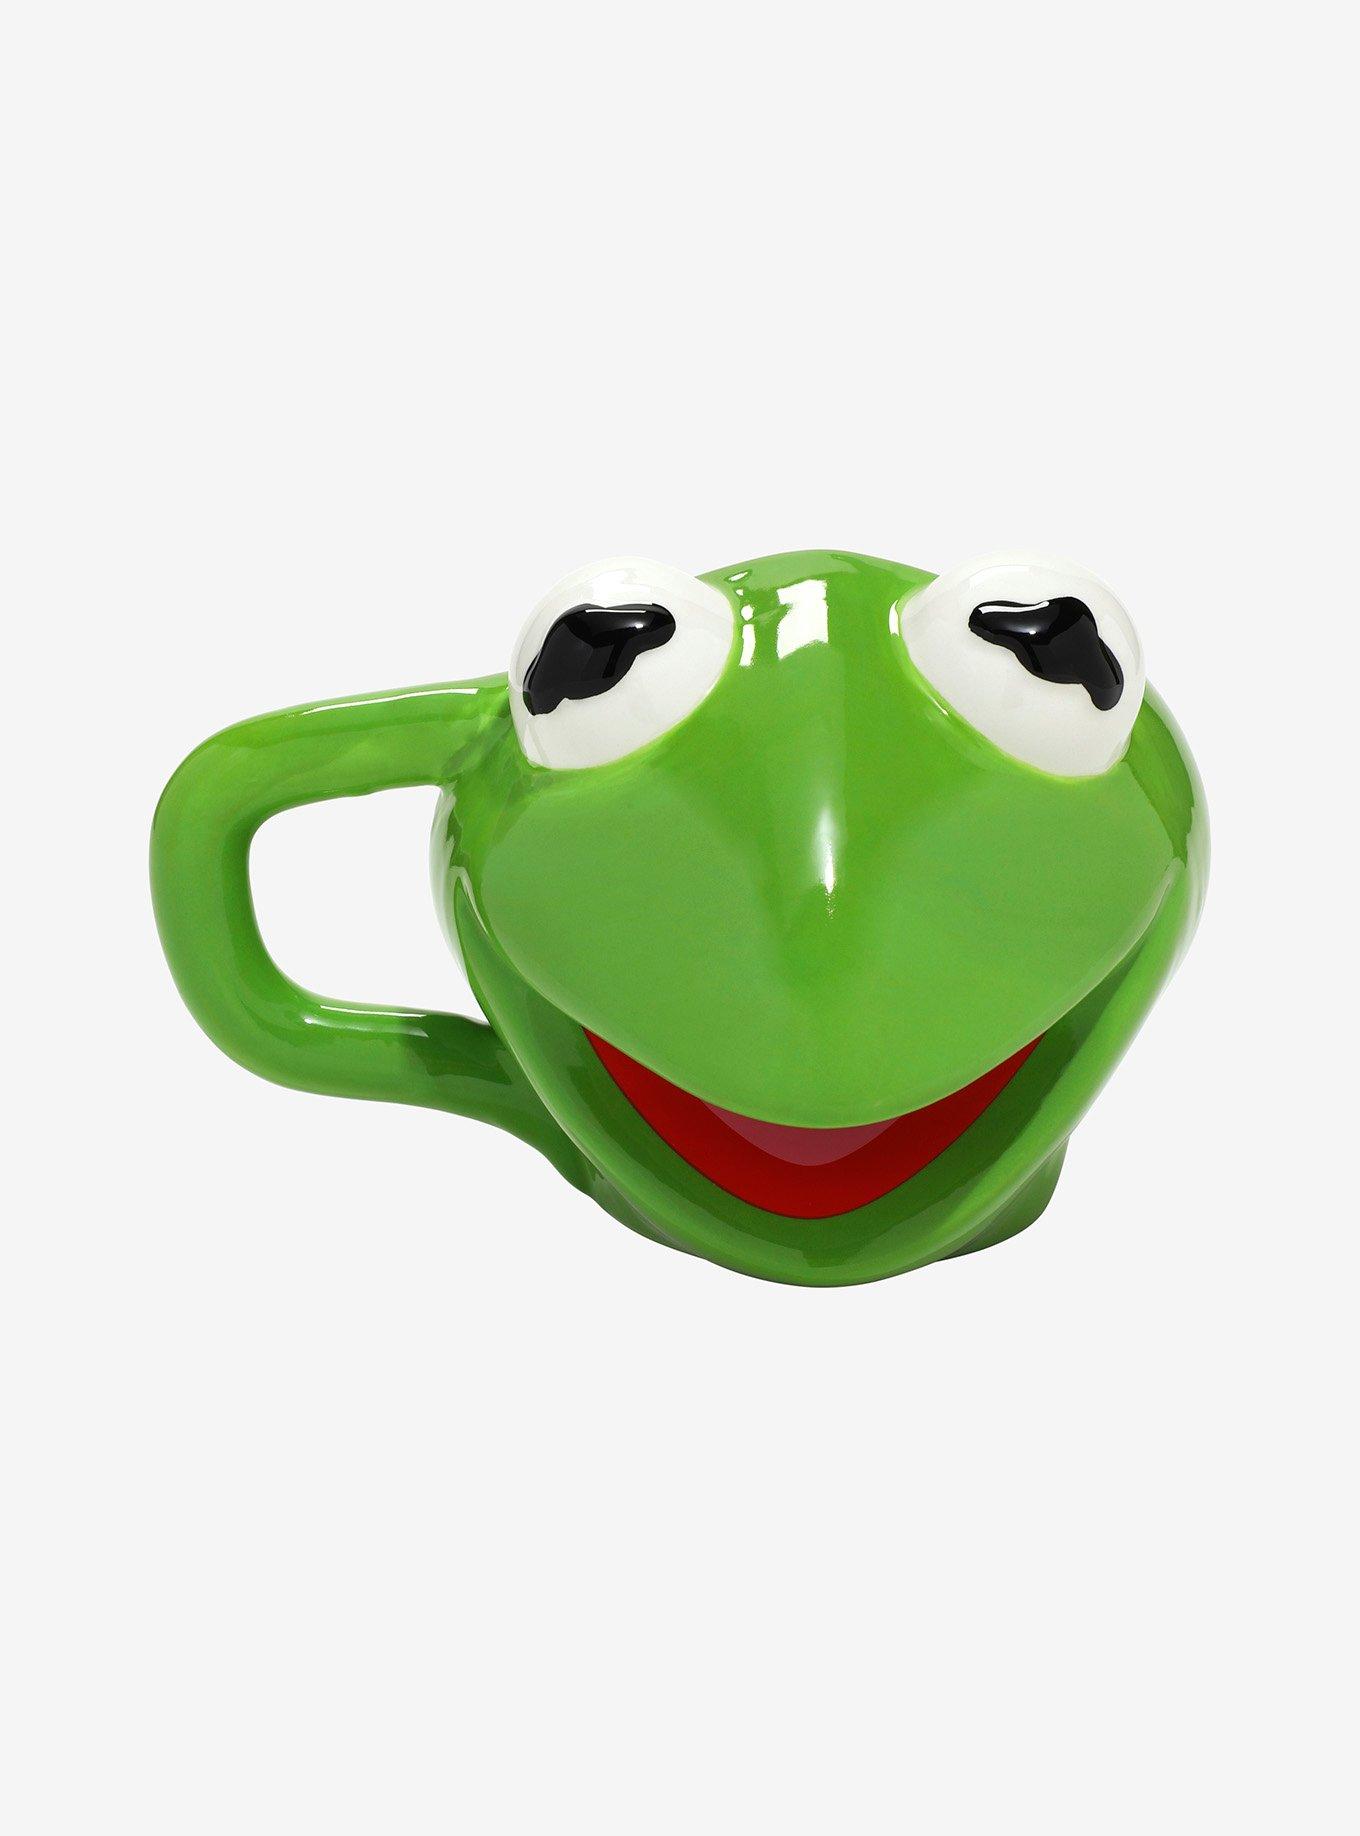 The Muppets Kermit the Frog Figural Mug